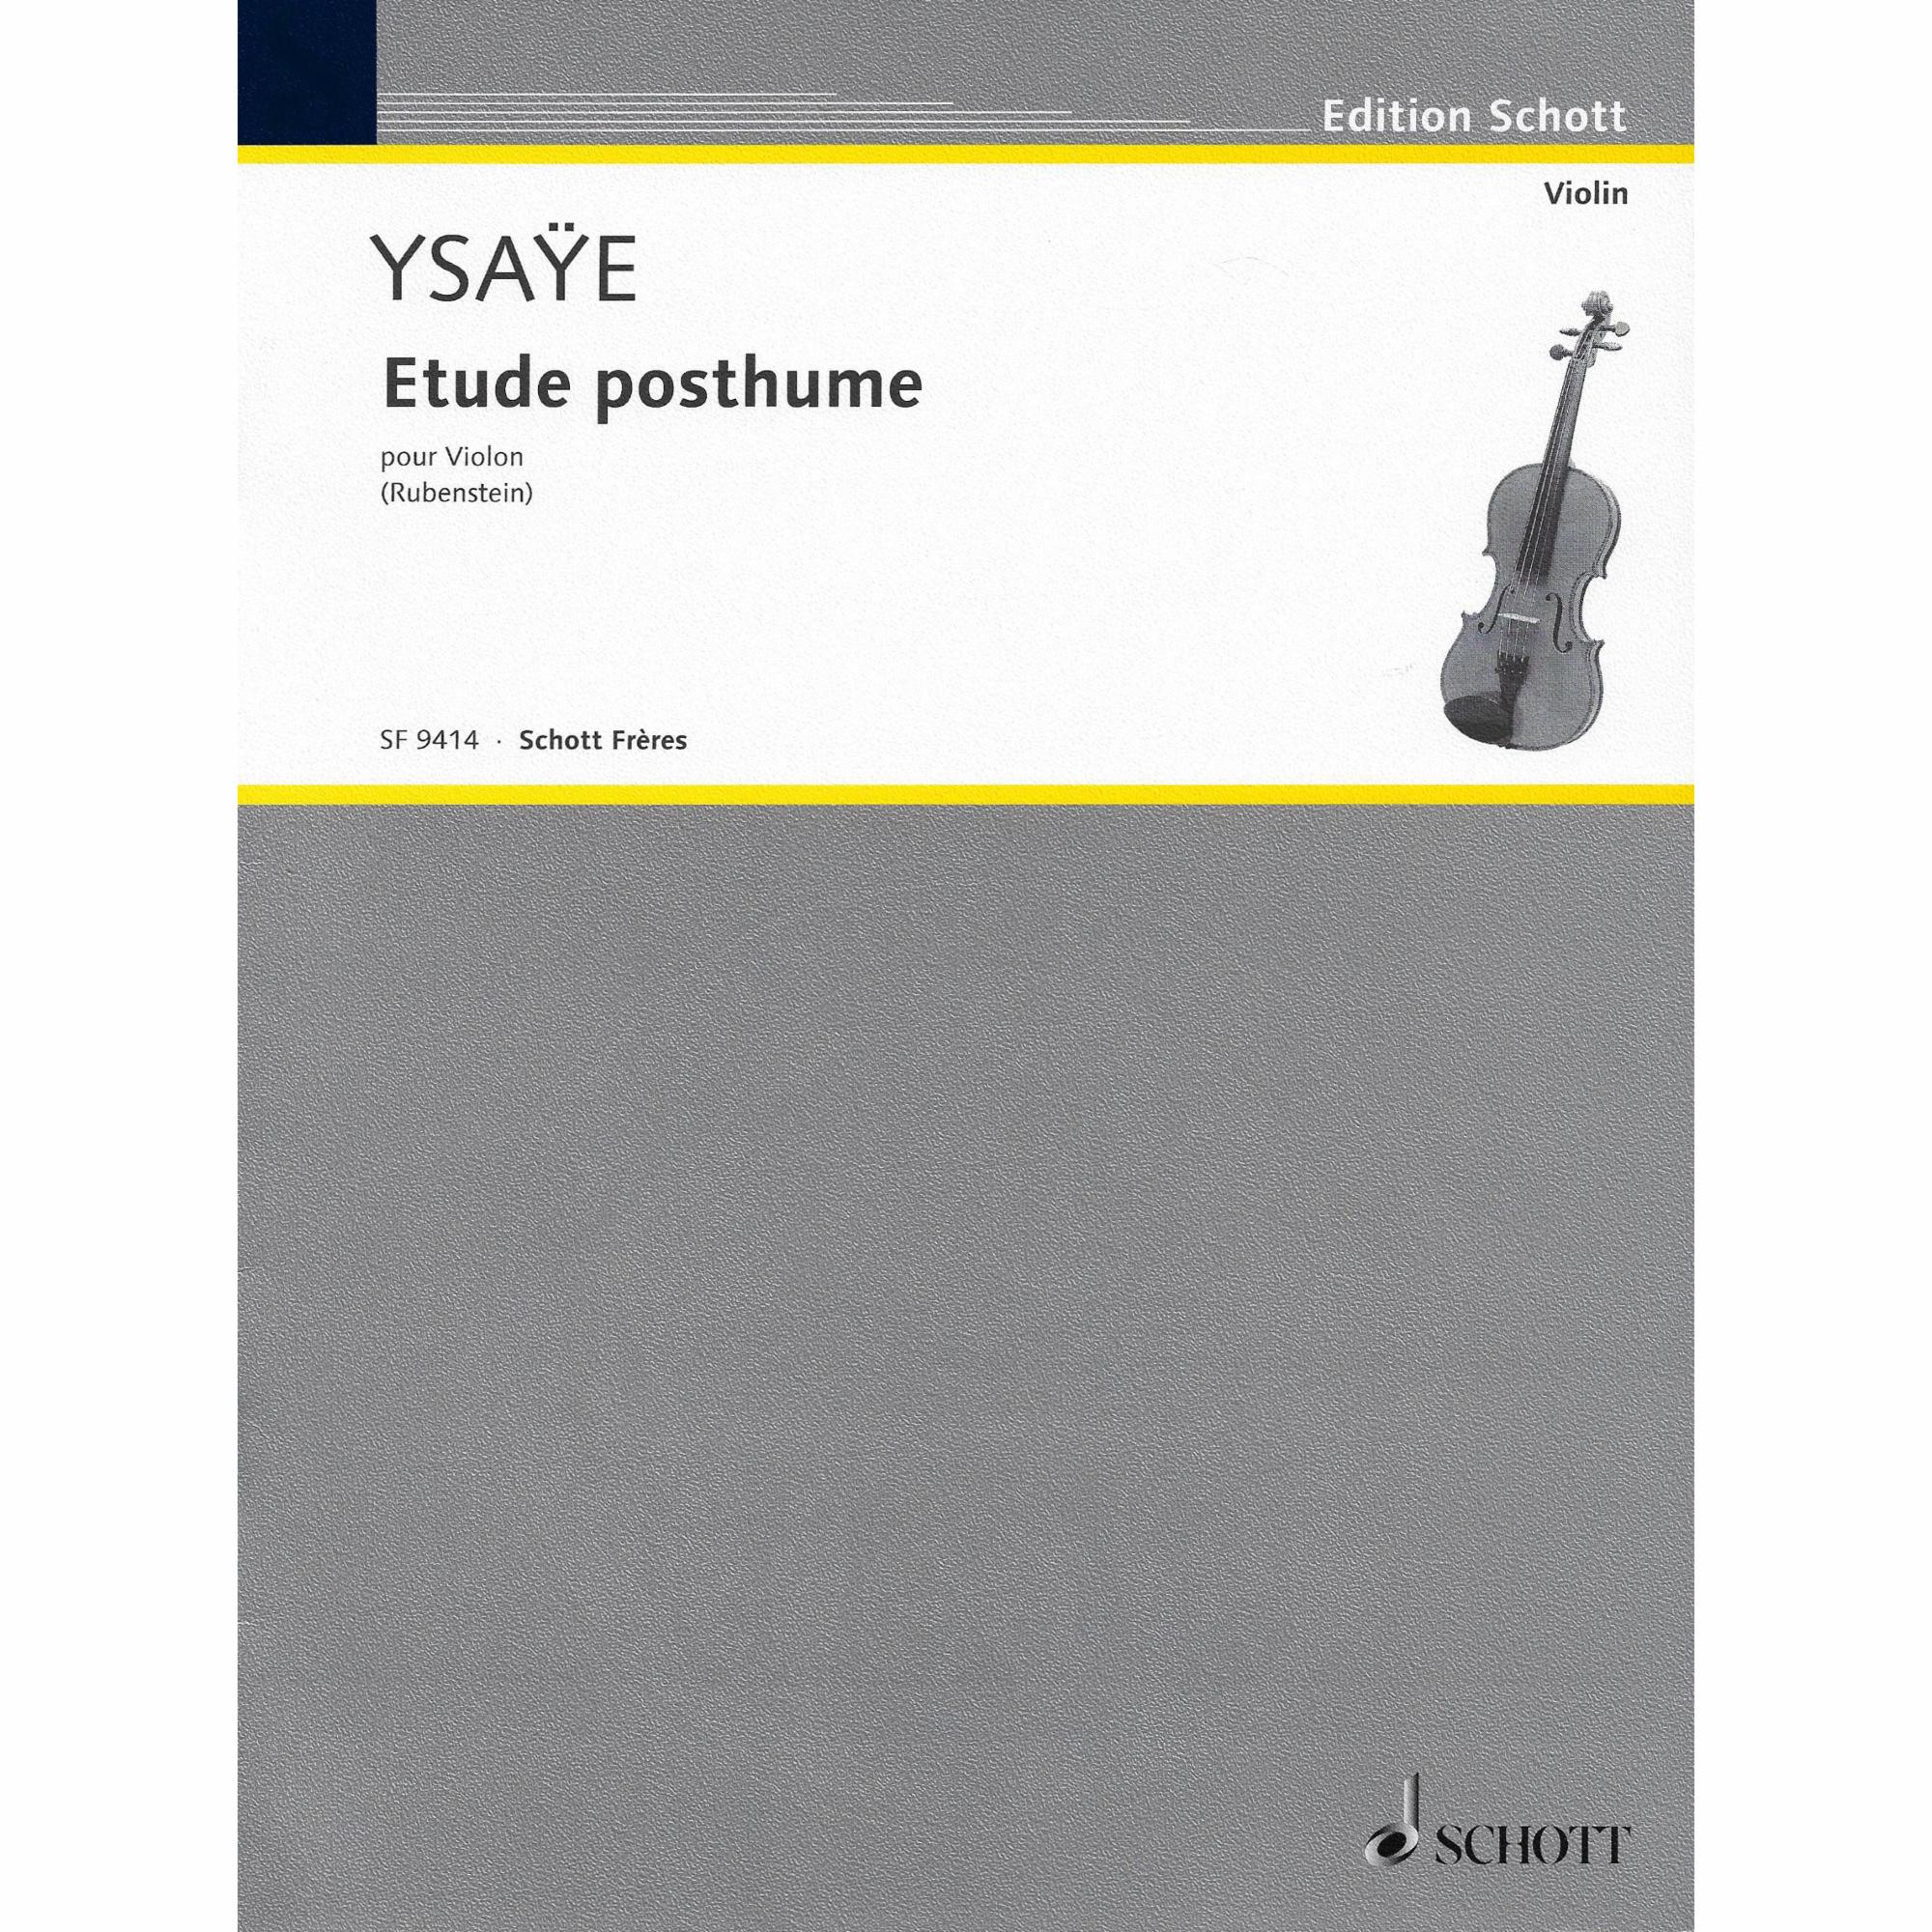 Ysaye -- Etude Posthume for Violin